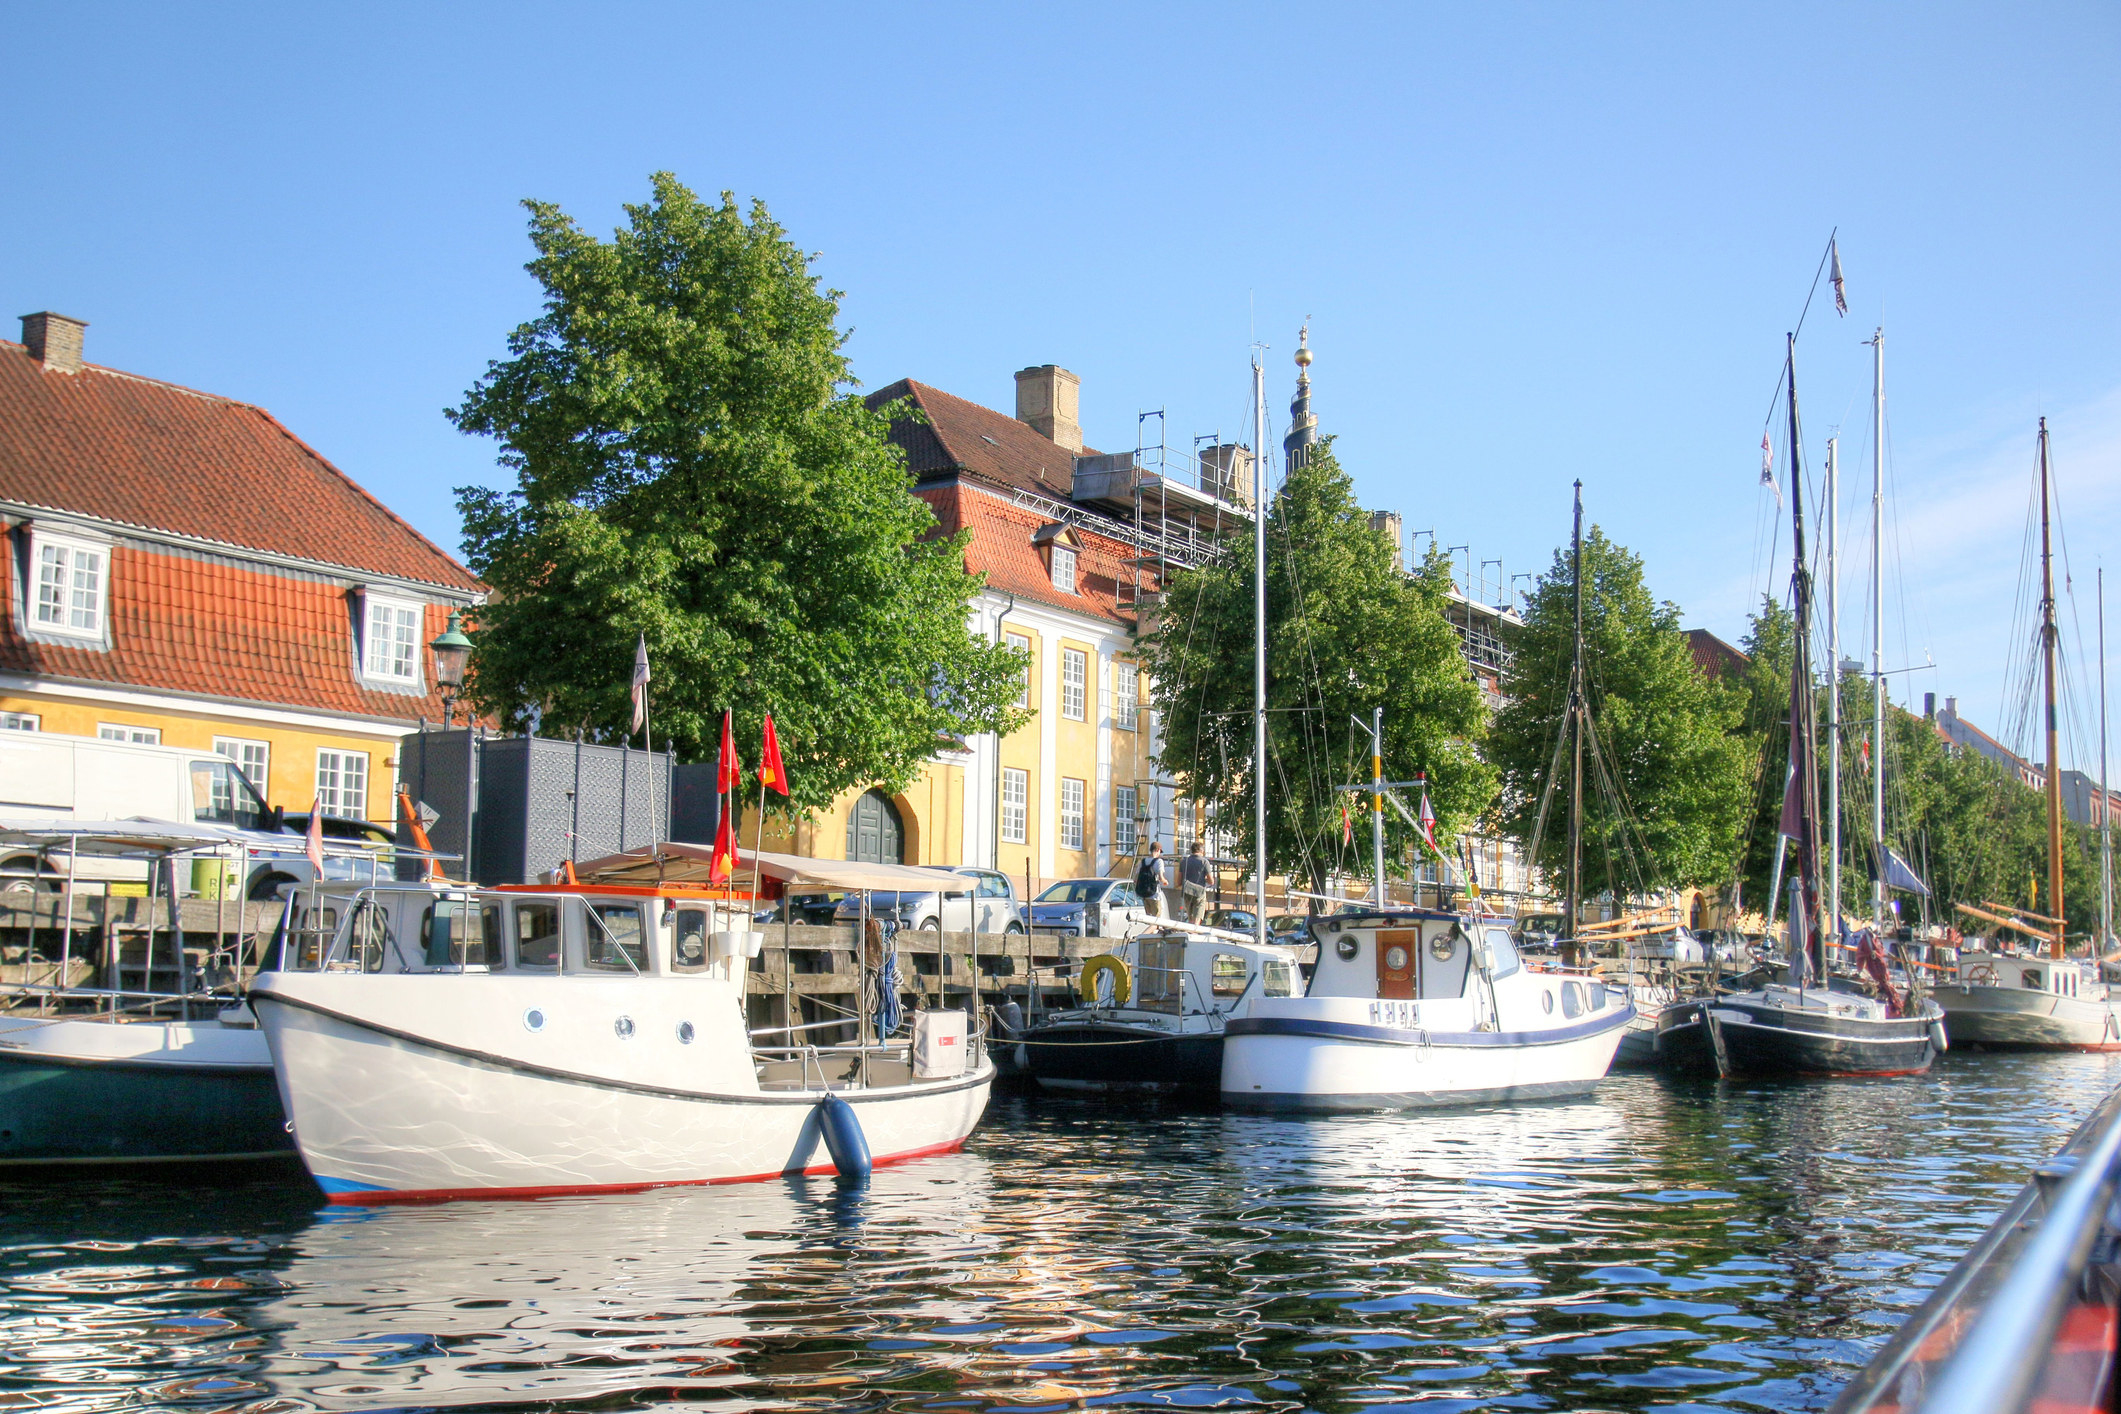 Boats in a harbor near Christiania, Copenhagen.